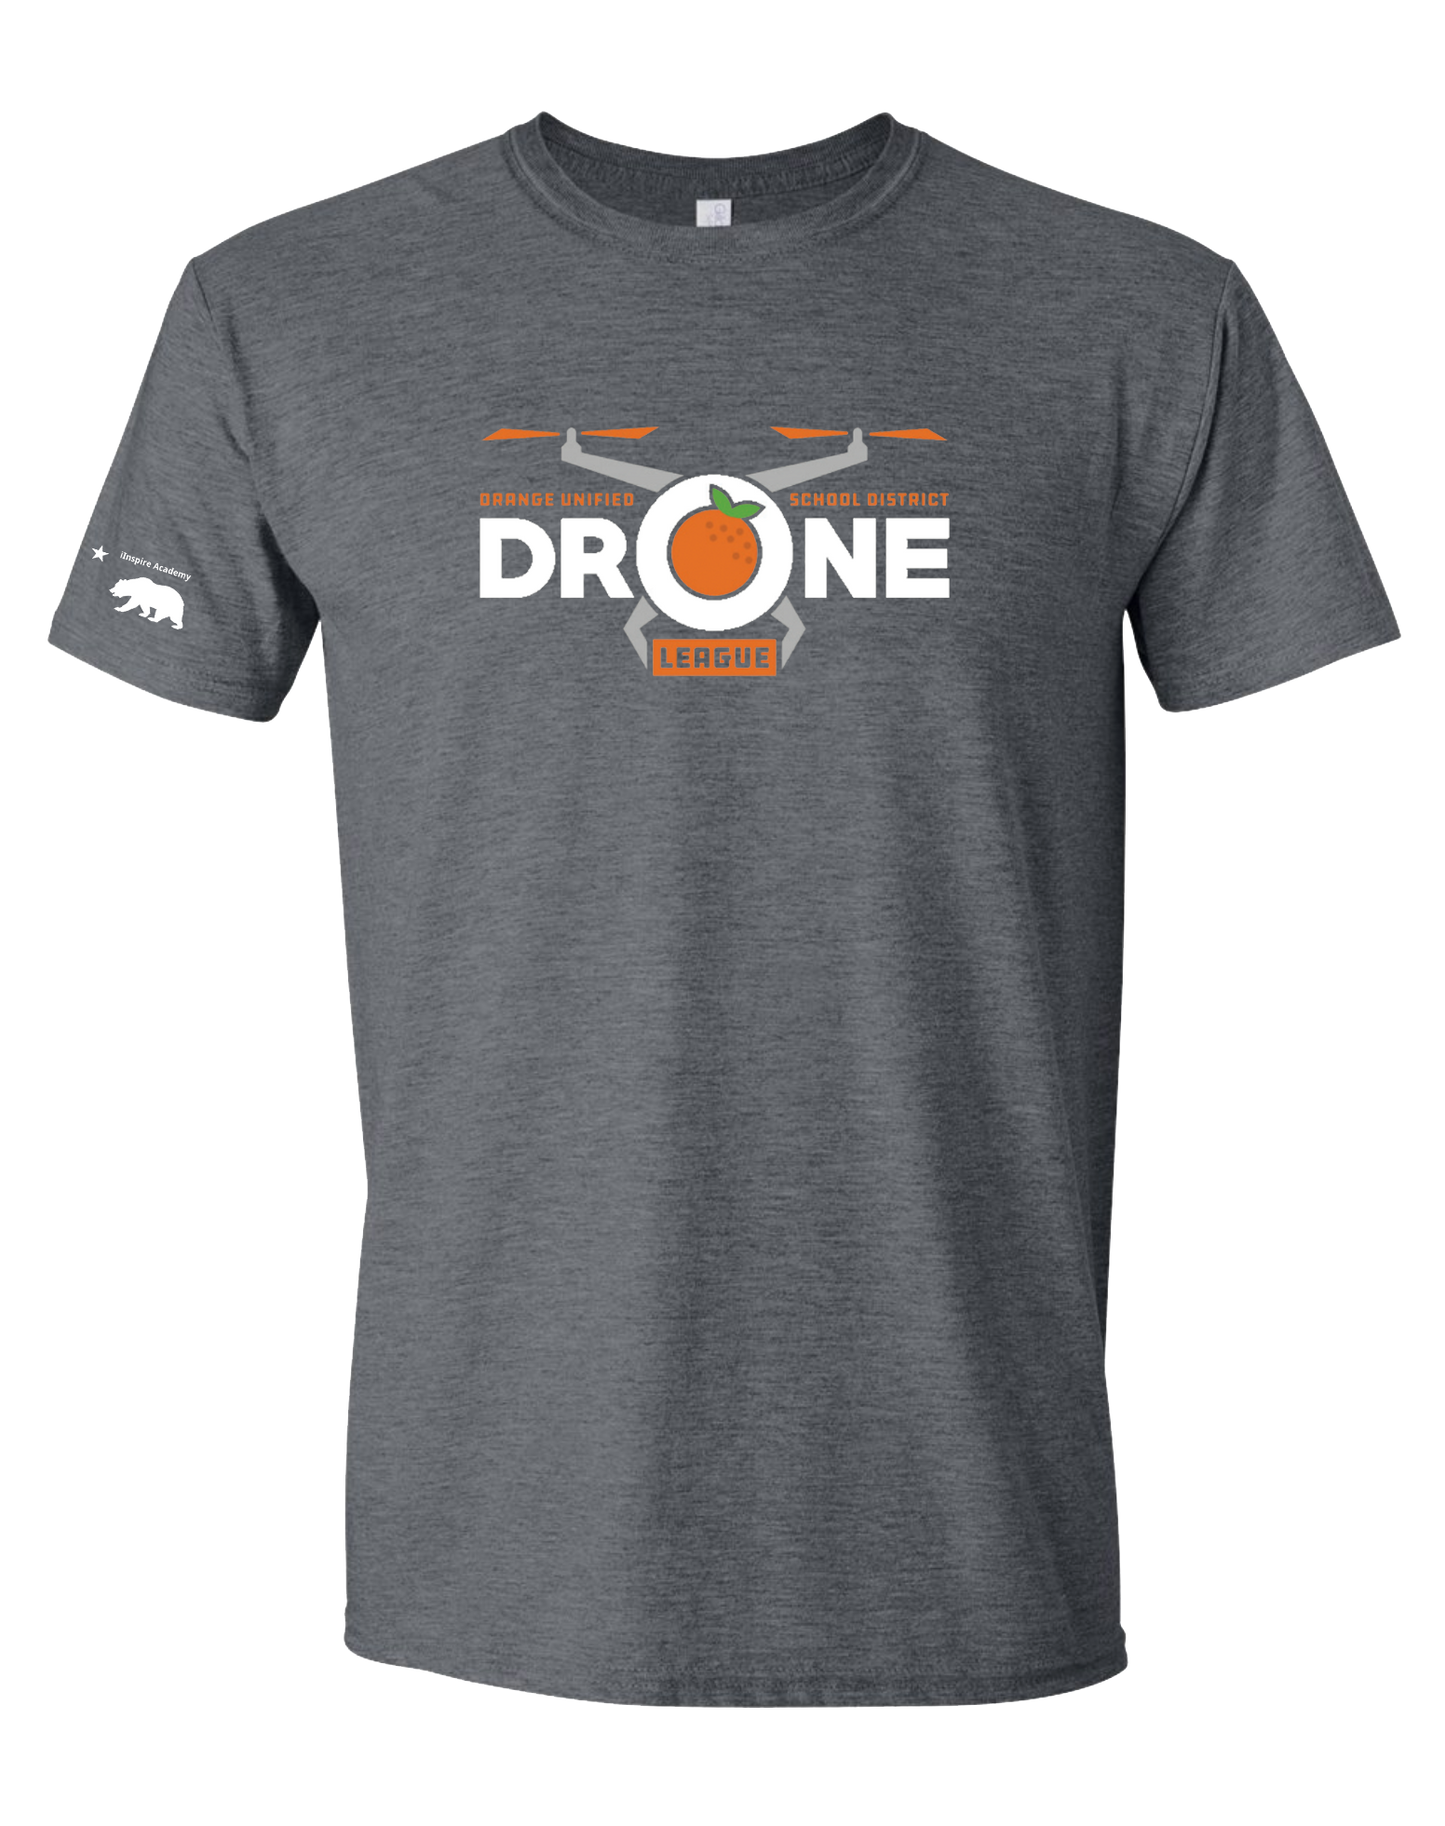 California Elementary - Drone league T-shirt (Dark Heather)